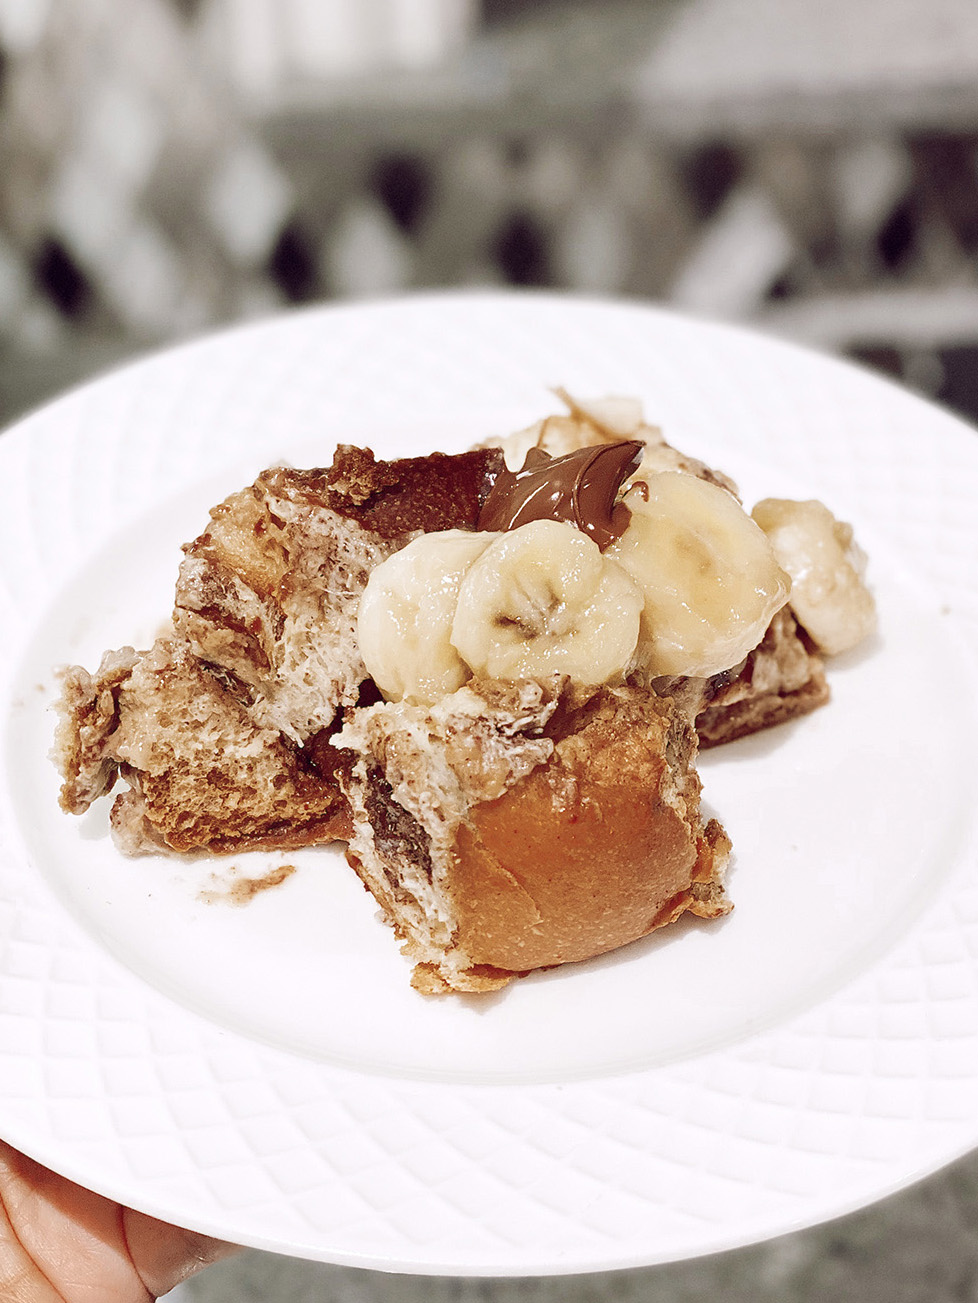 Crockpot breakfast recipe - nutella french toast casserole with caramelized bananas